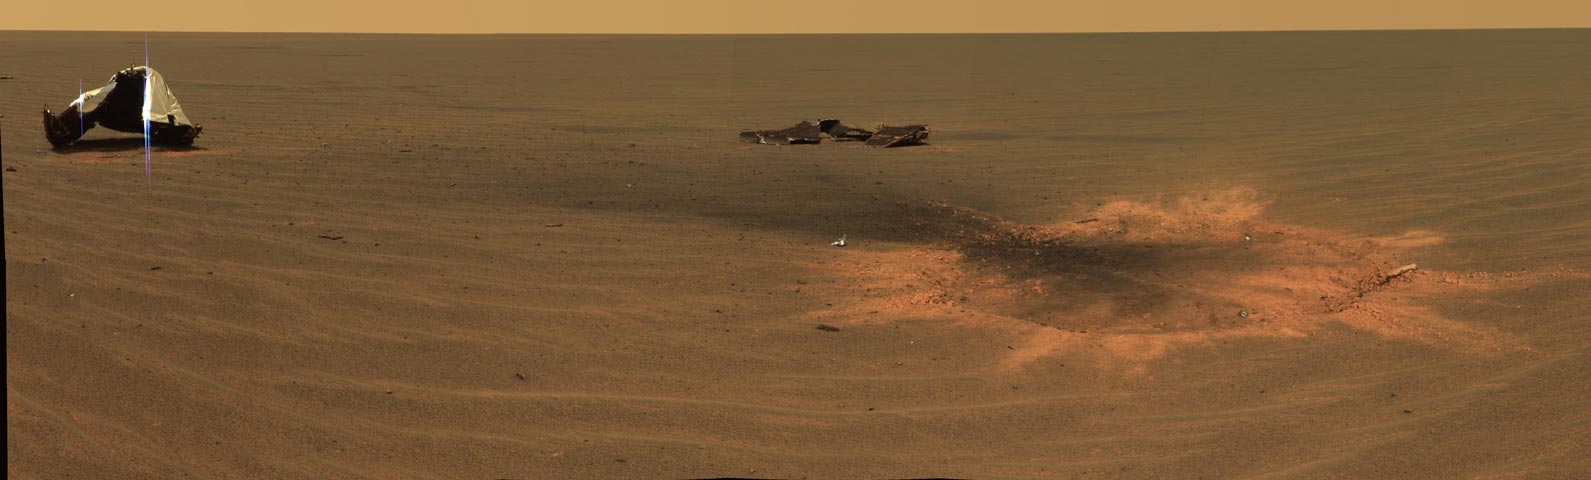 a self-portrait of the Curiosity rover on Mars